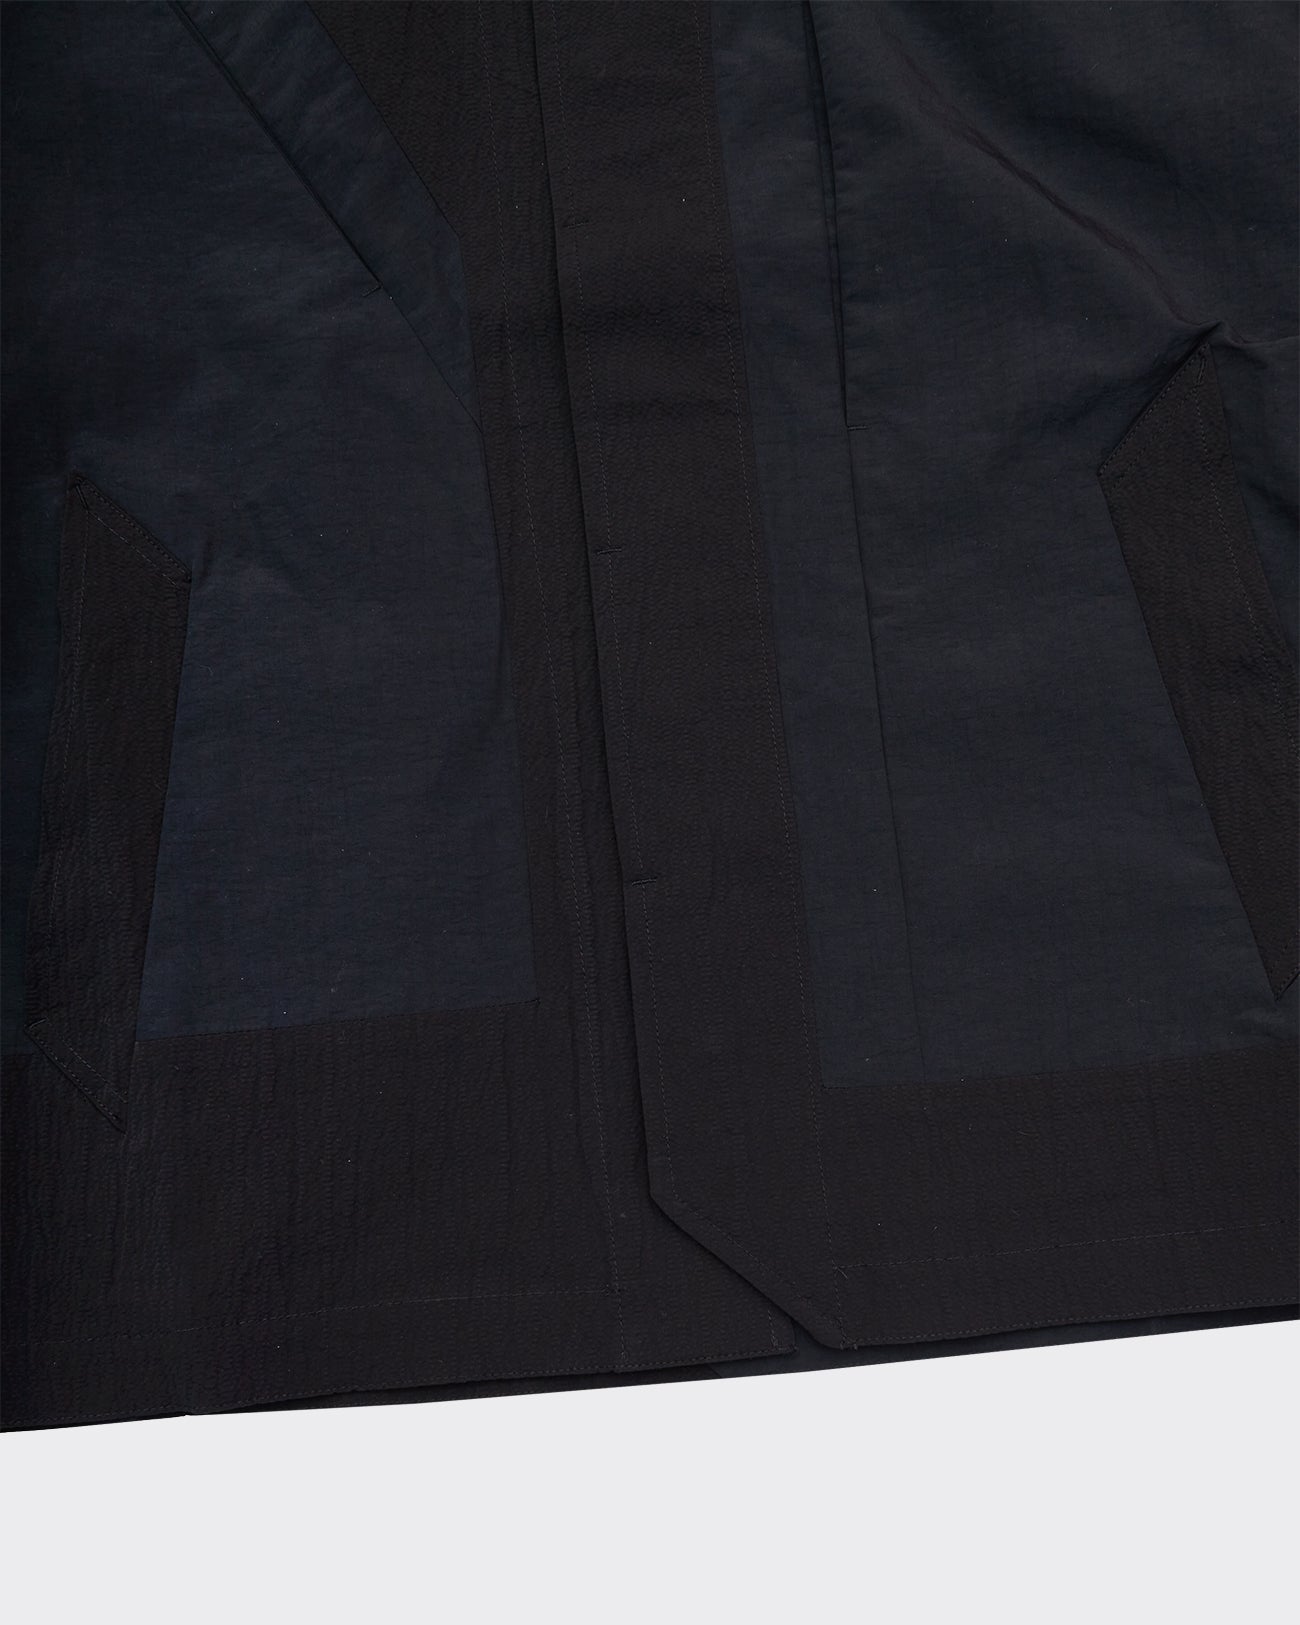 Dual Texture Black Shirt